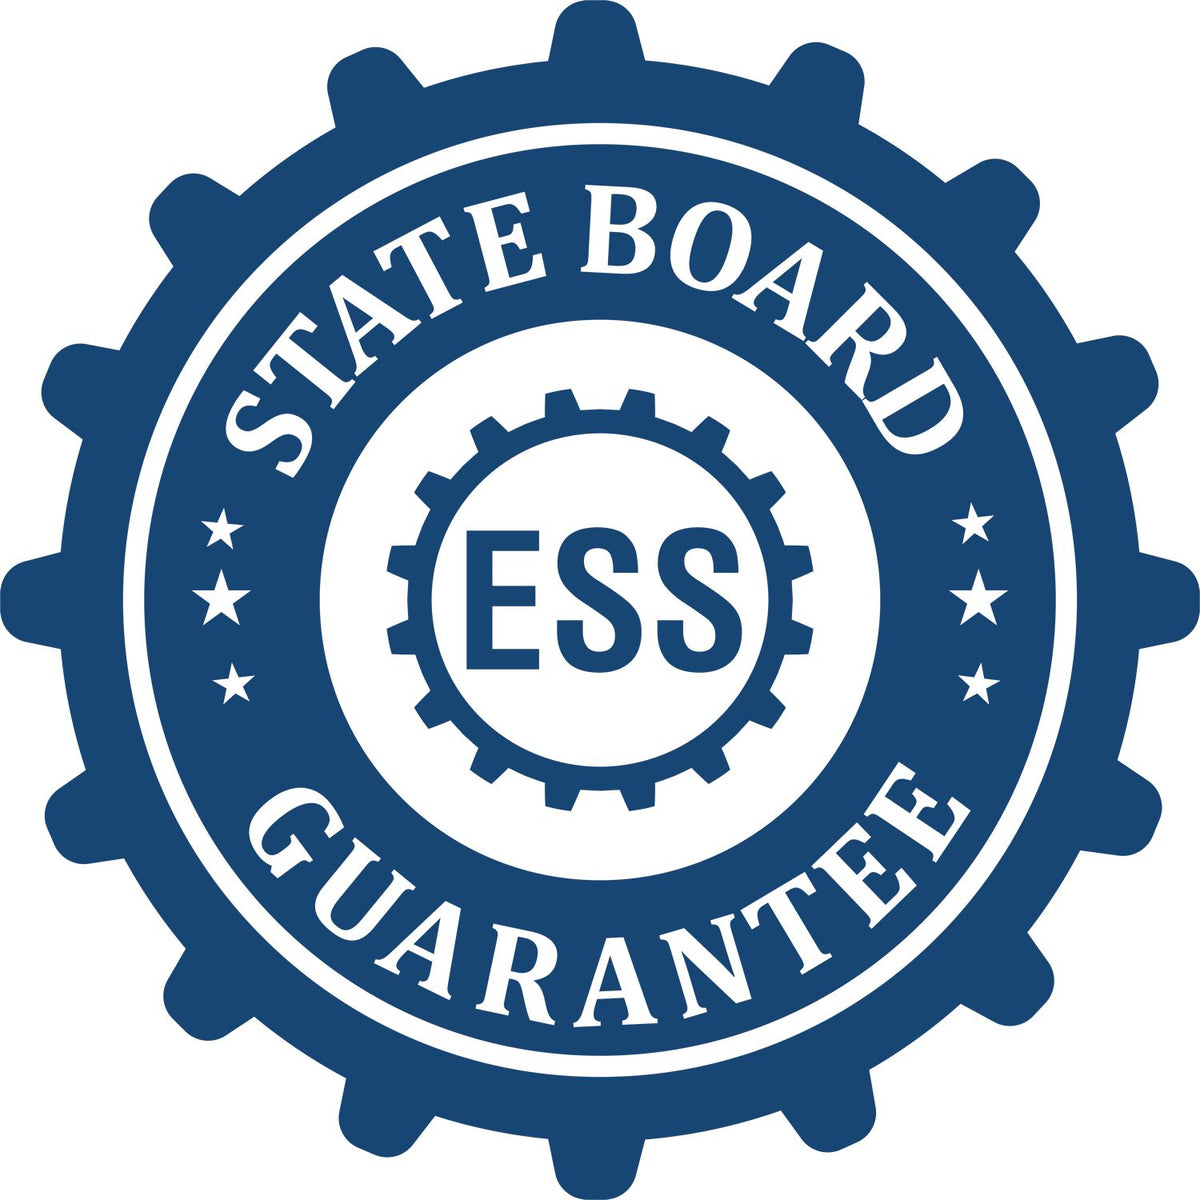 An emblem in a gear shape illustrating a state board guarantee for the Hybrid South Dakota Land Surveyor Seal